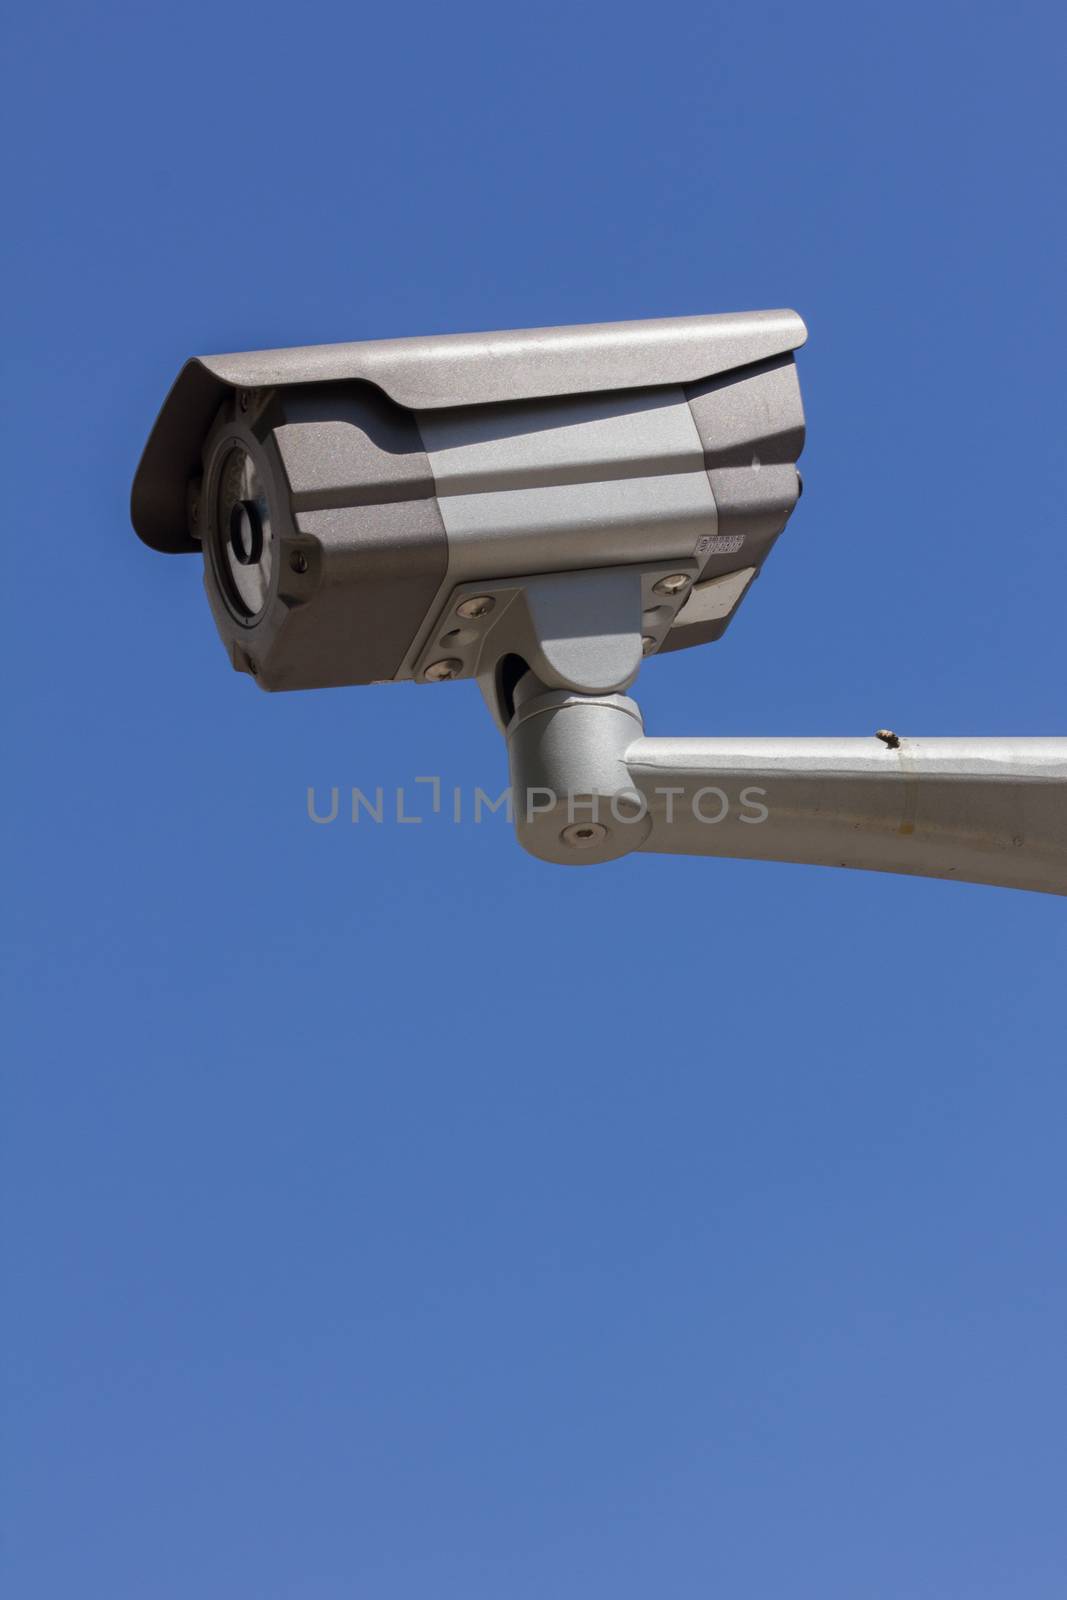 CCTV security camera, blue sky background by a3701027